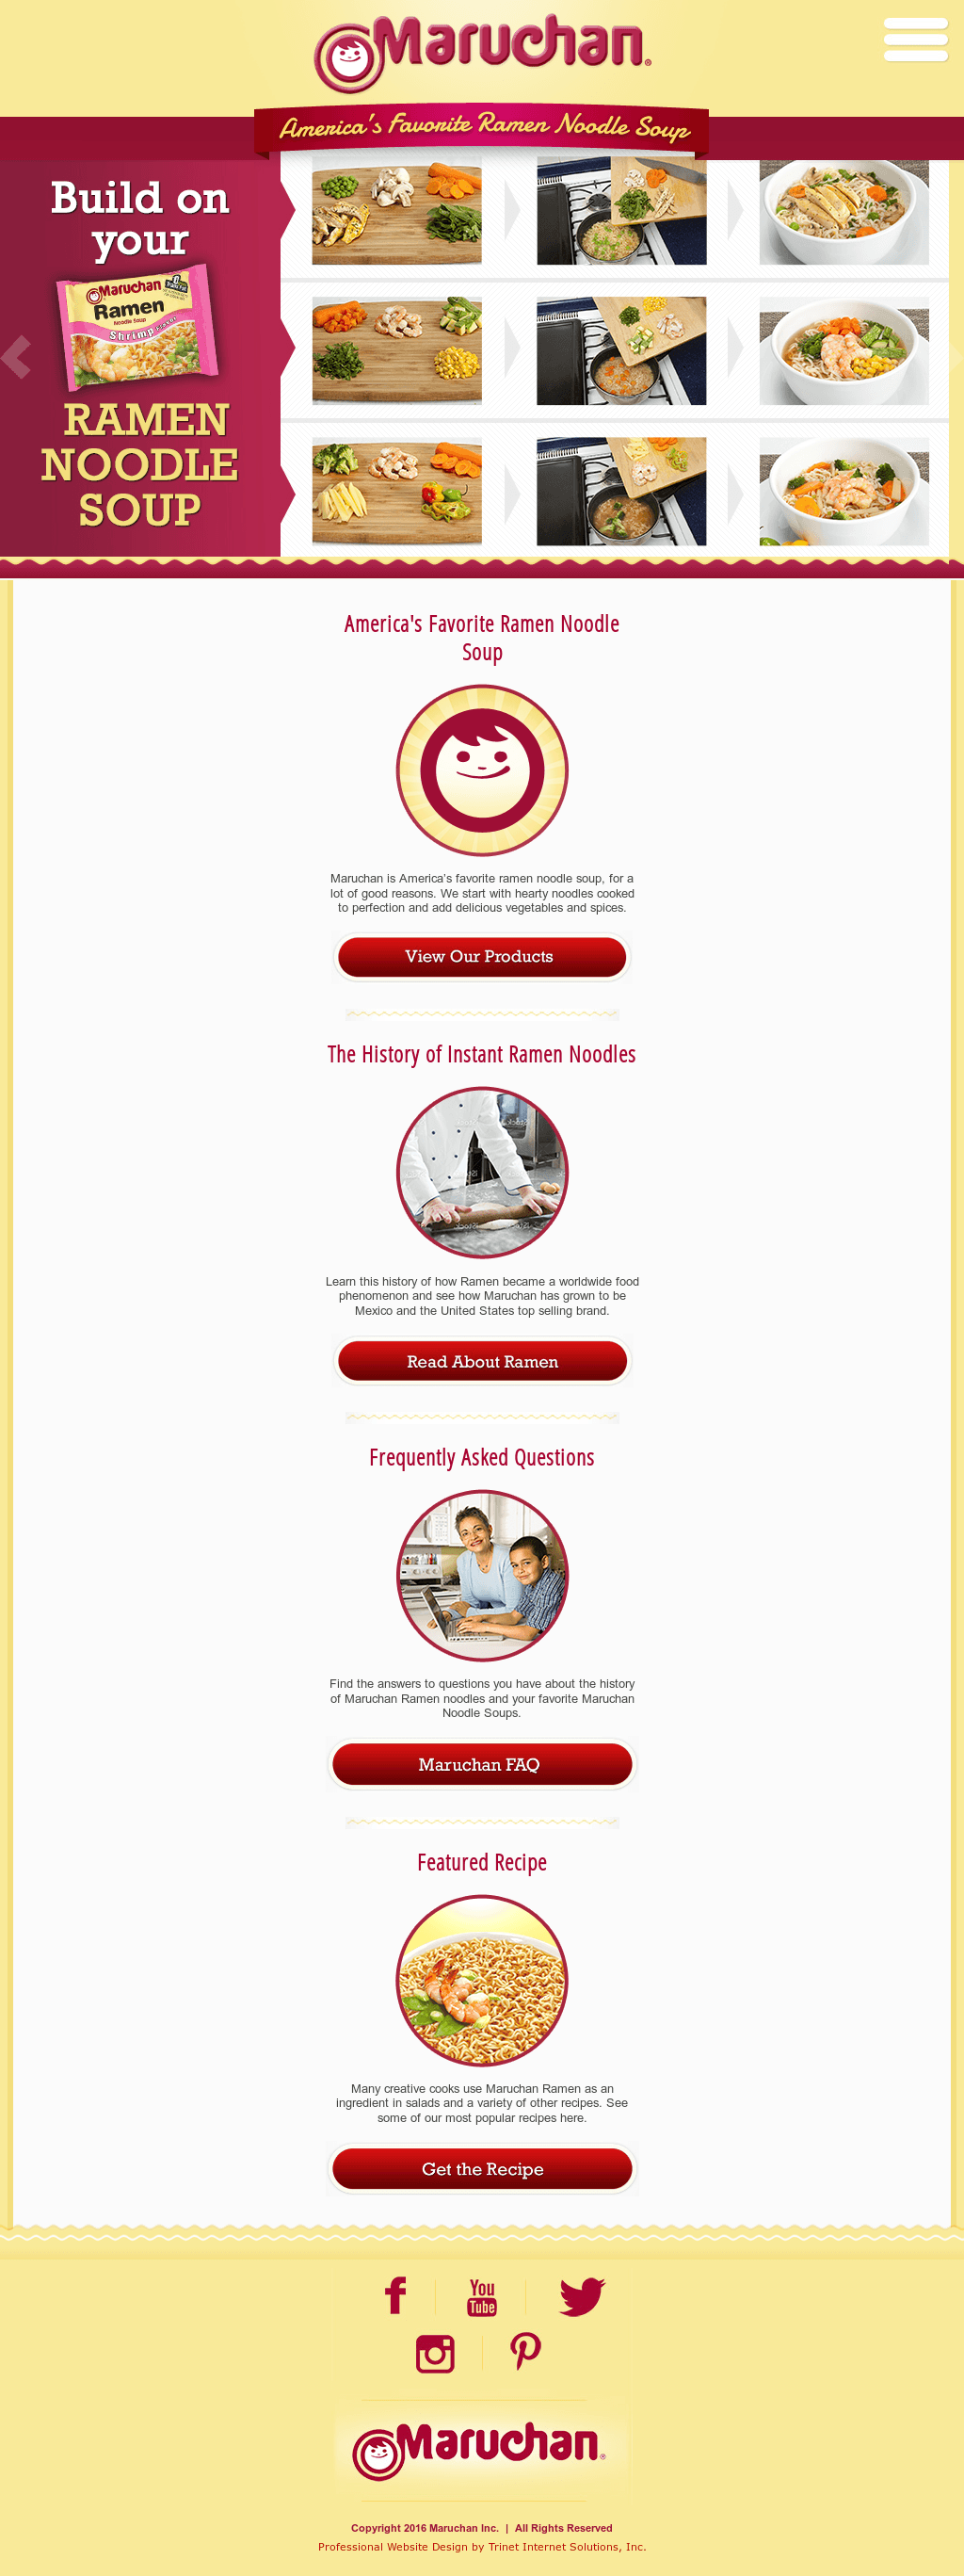 Maruchan Ramen Logo - Maruchan Competitors, Revenue and Employees Company Profile